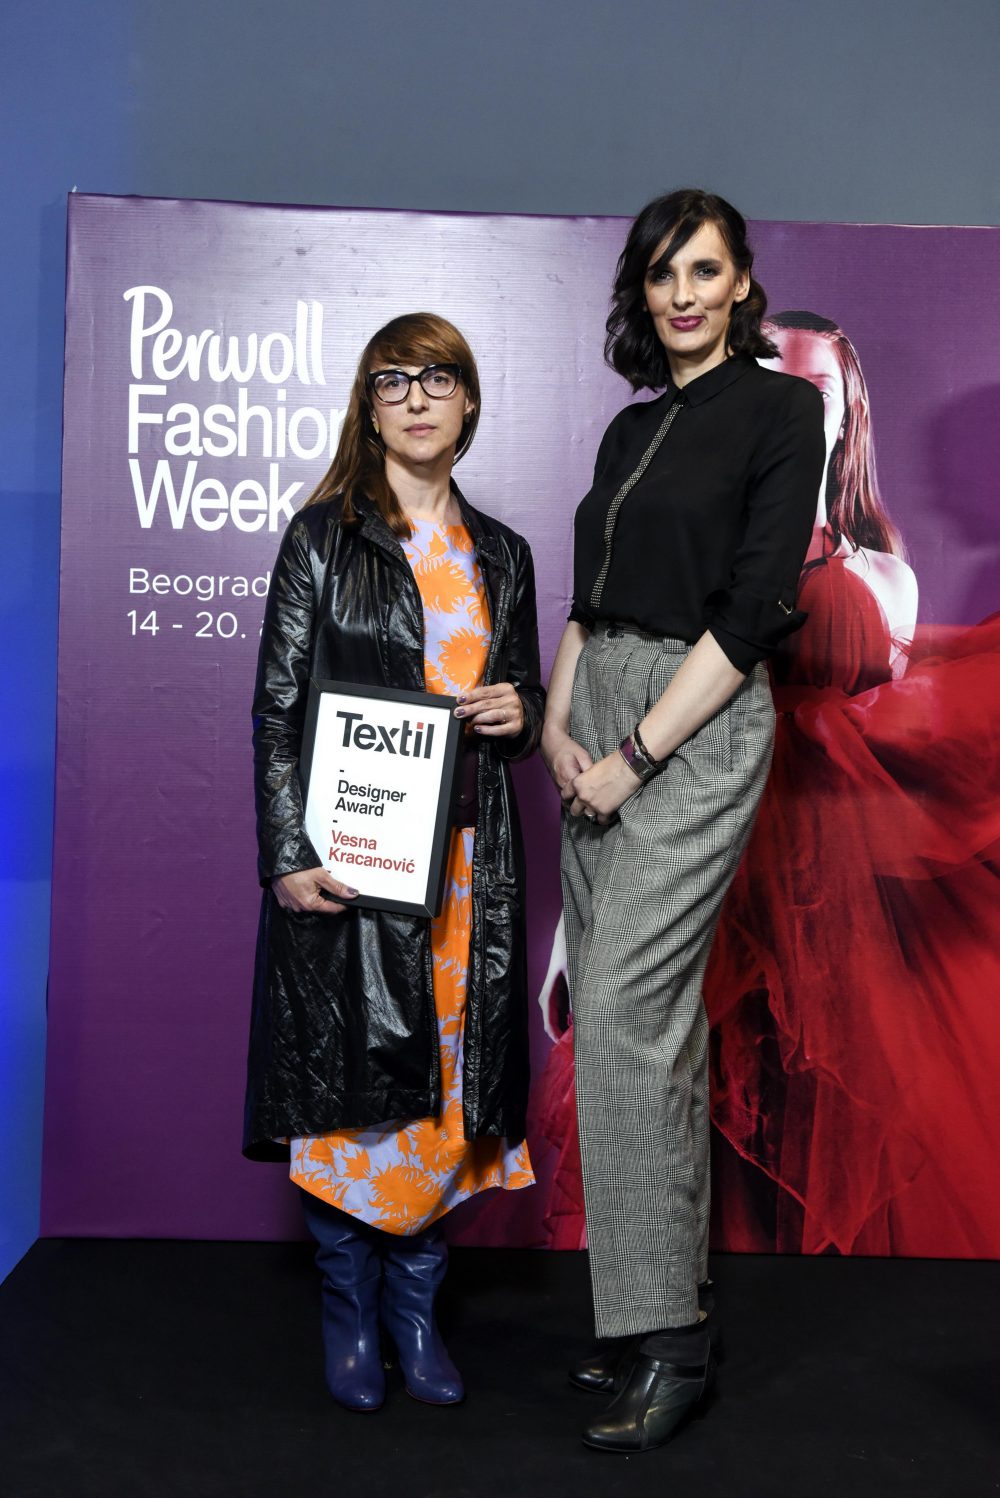 Vesna Kracanovic nagrada Textil Designer Award e1557485400246 Nagrađeni najbolji učesnici Perwoll Fashion Week a